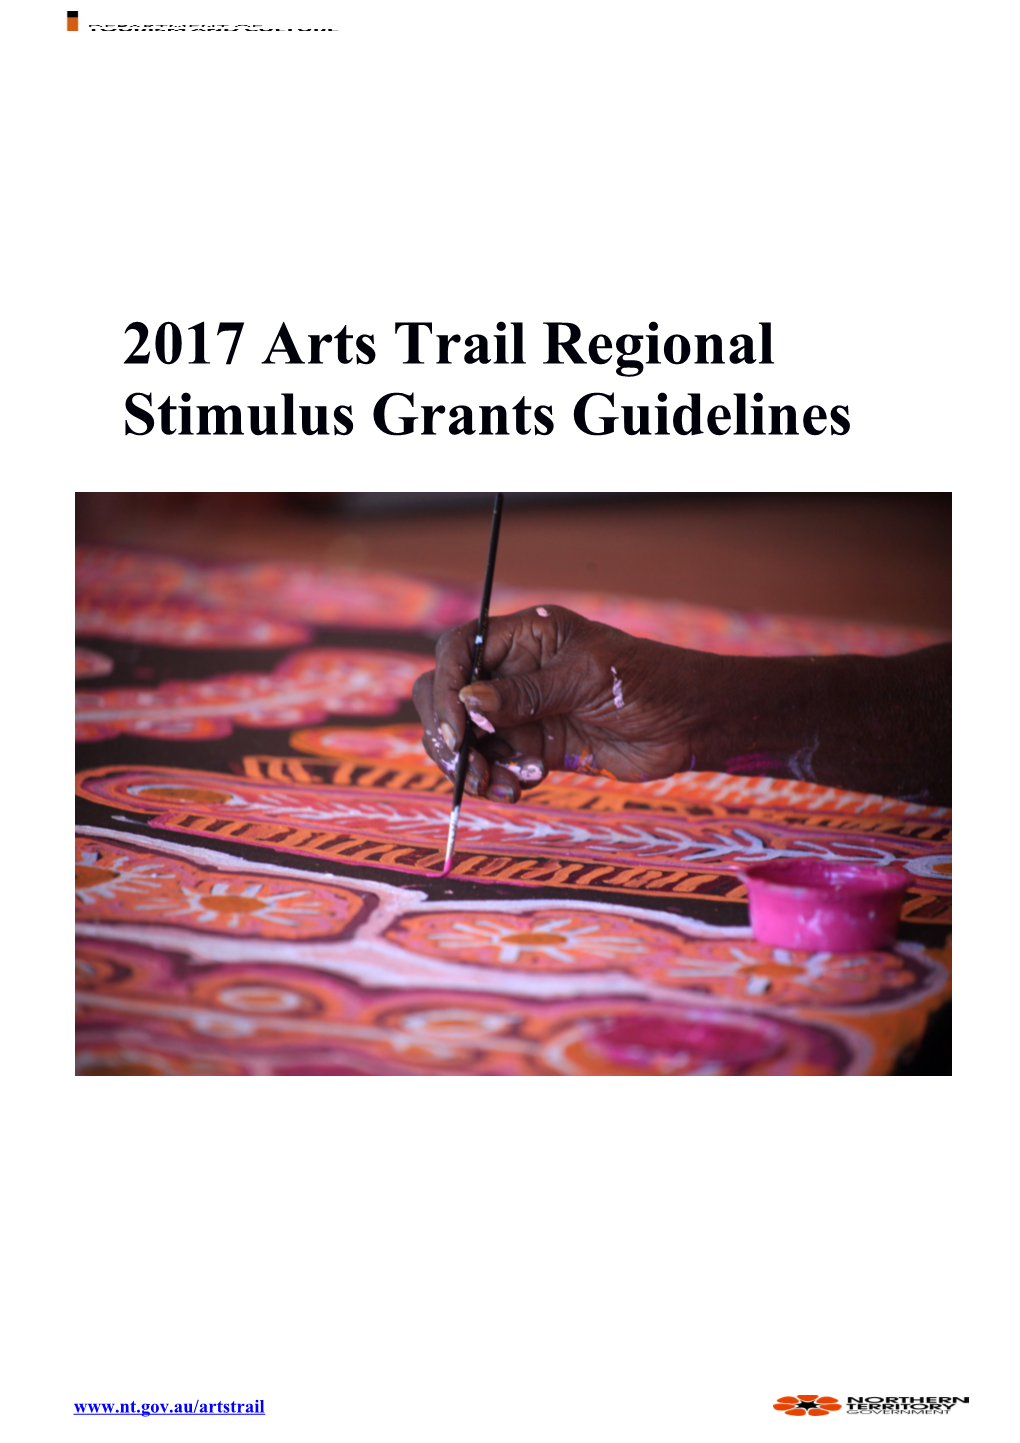 2017 Arts Trail Regional Stimulus Grants Guidelines